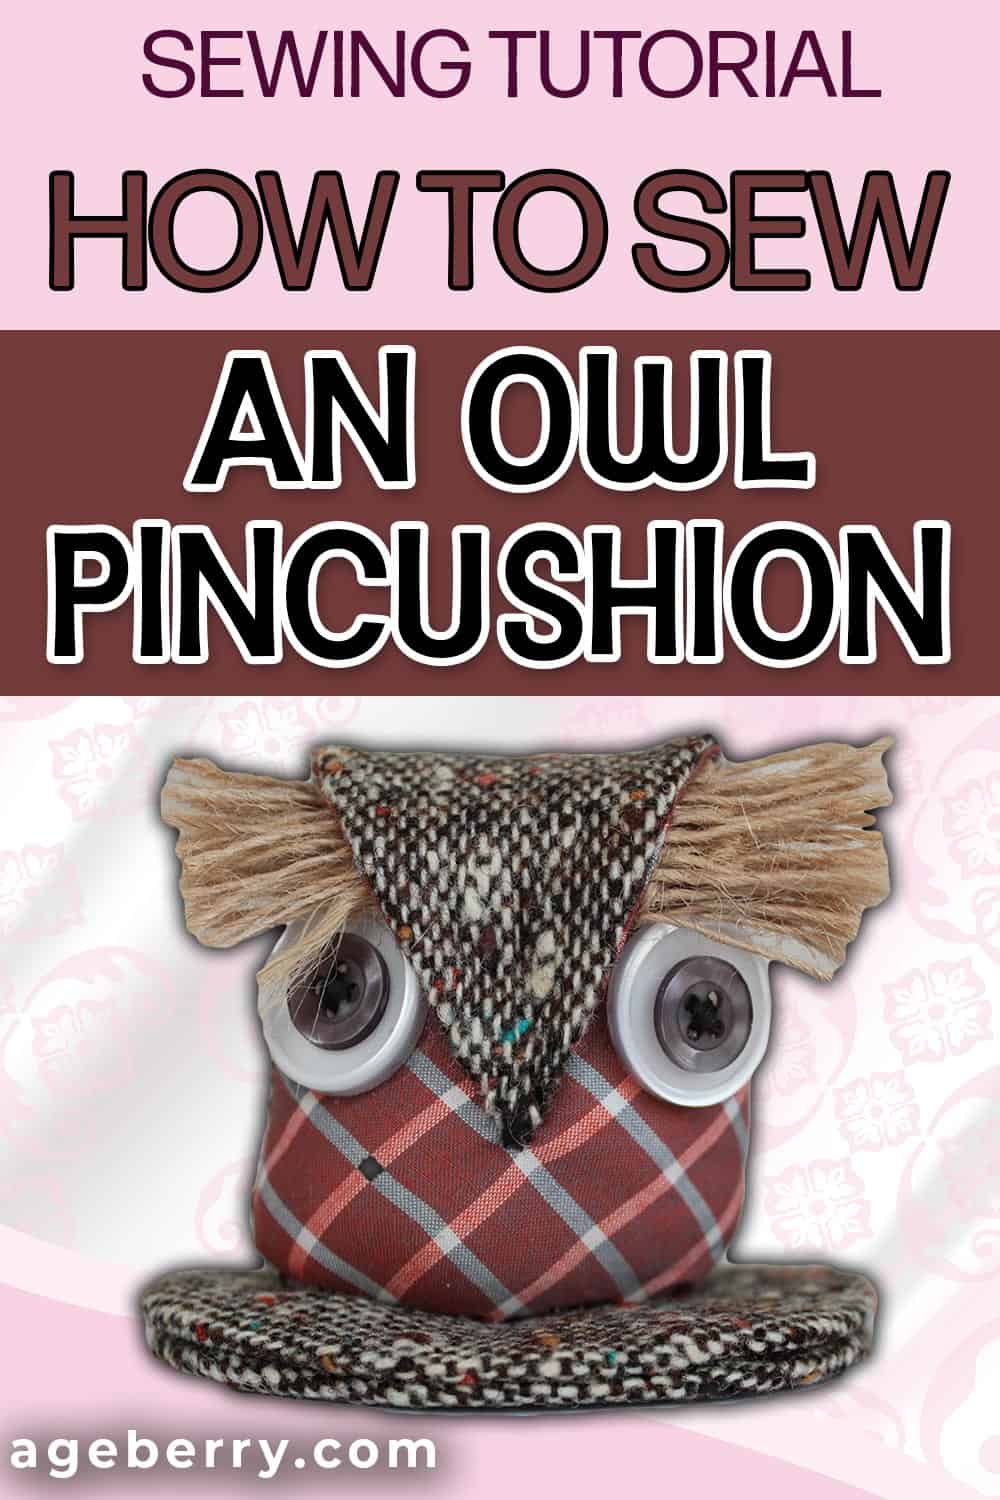 How to sew an owl pincushion